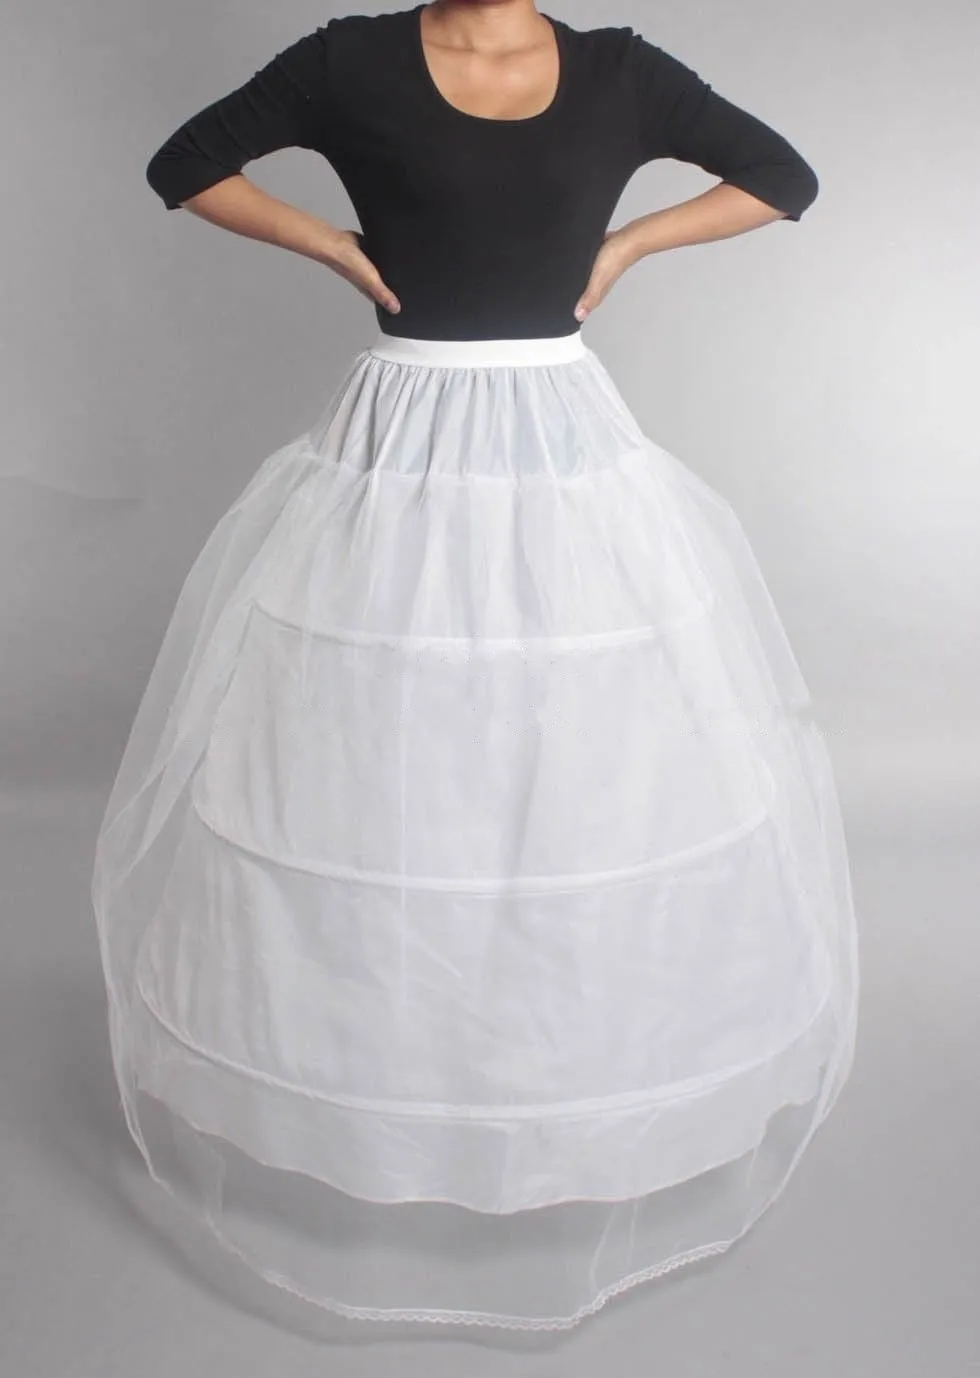 New Ladies Wedding Bridal Prom Petticoat Underskirt Crinoline Dress Skirt S-XXL 